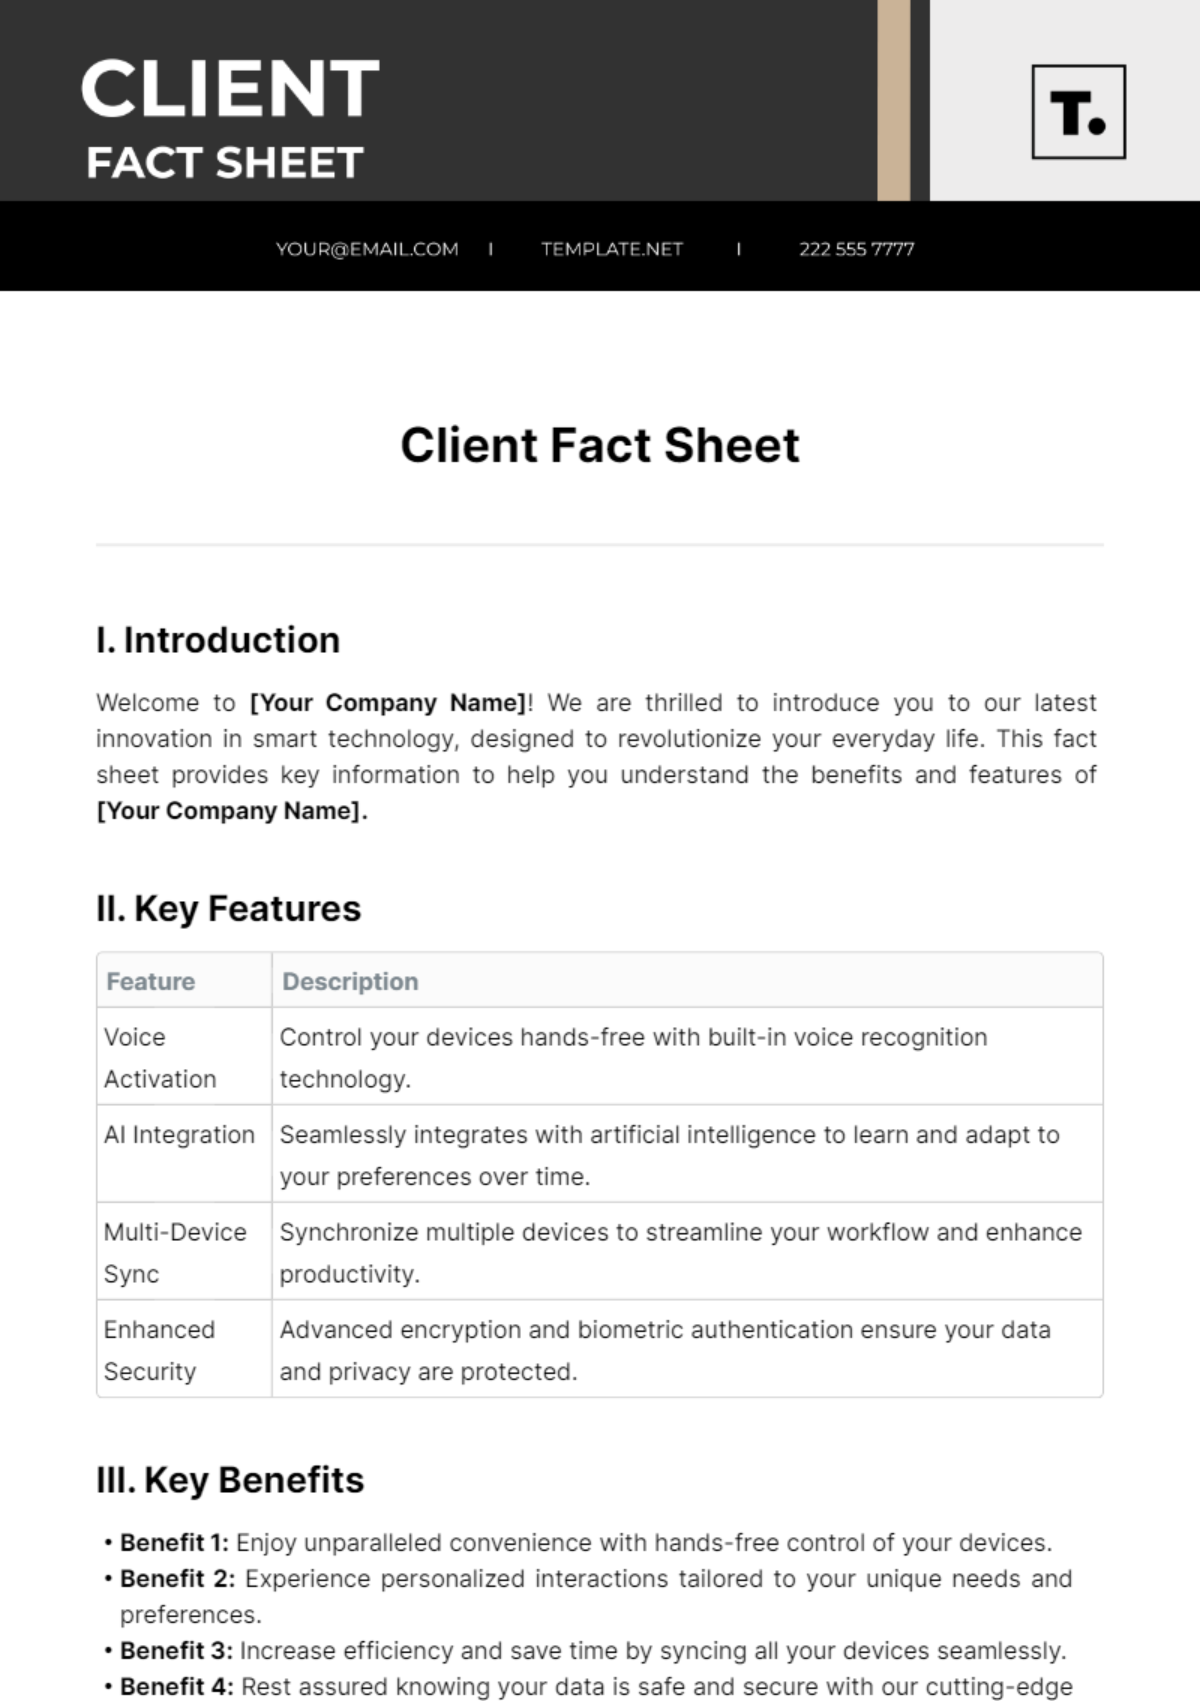 Free Client Fact Sheet Template